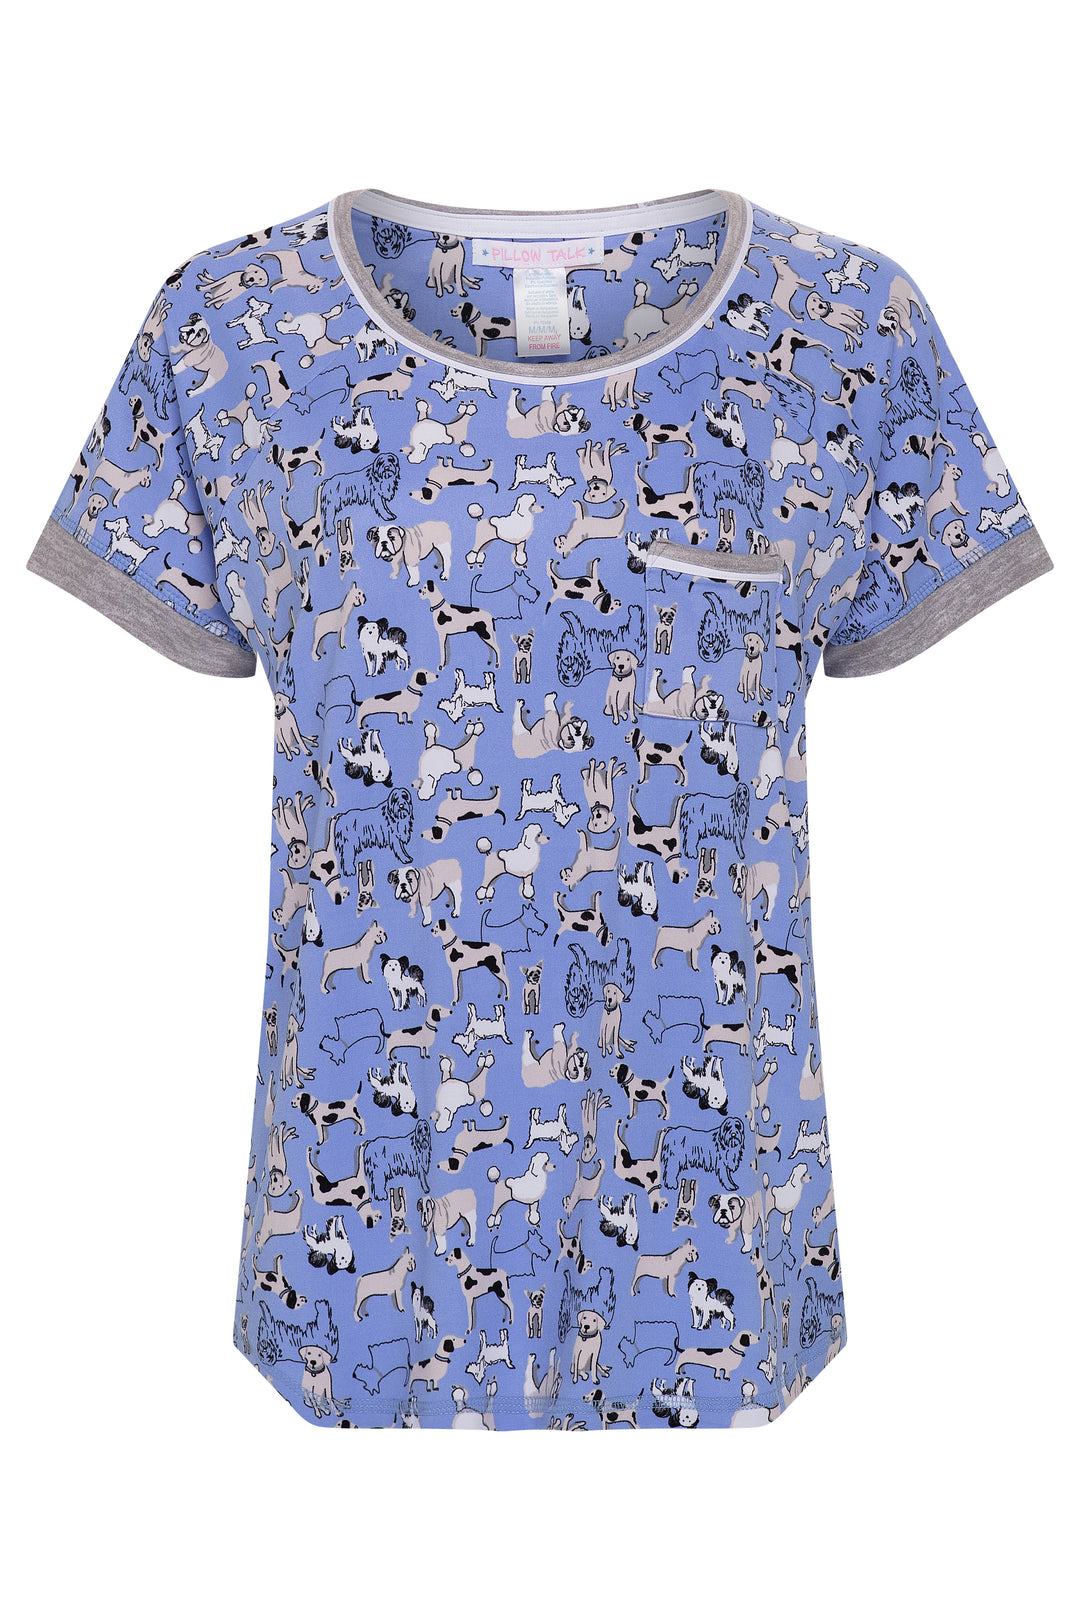 Animal patterned blue shirt as part of the René Rofé 2 Pack Lightweight Shirt Set in Blue Stars pattern